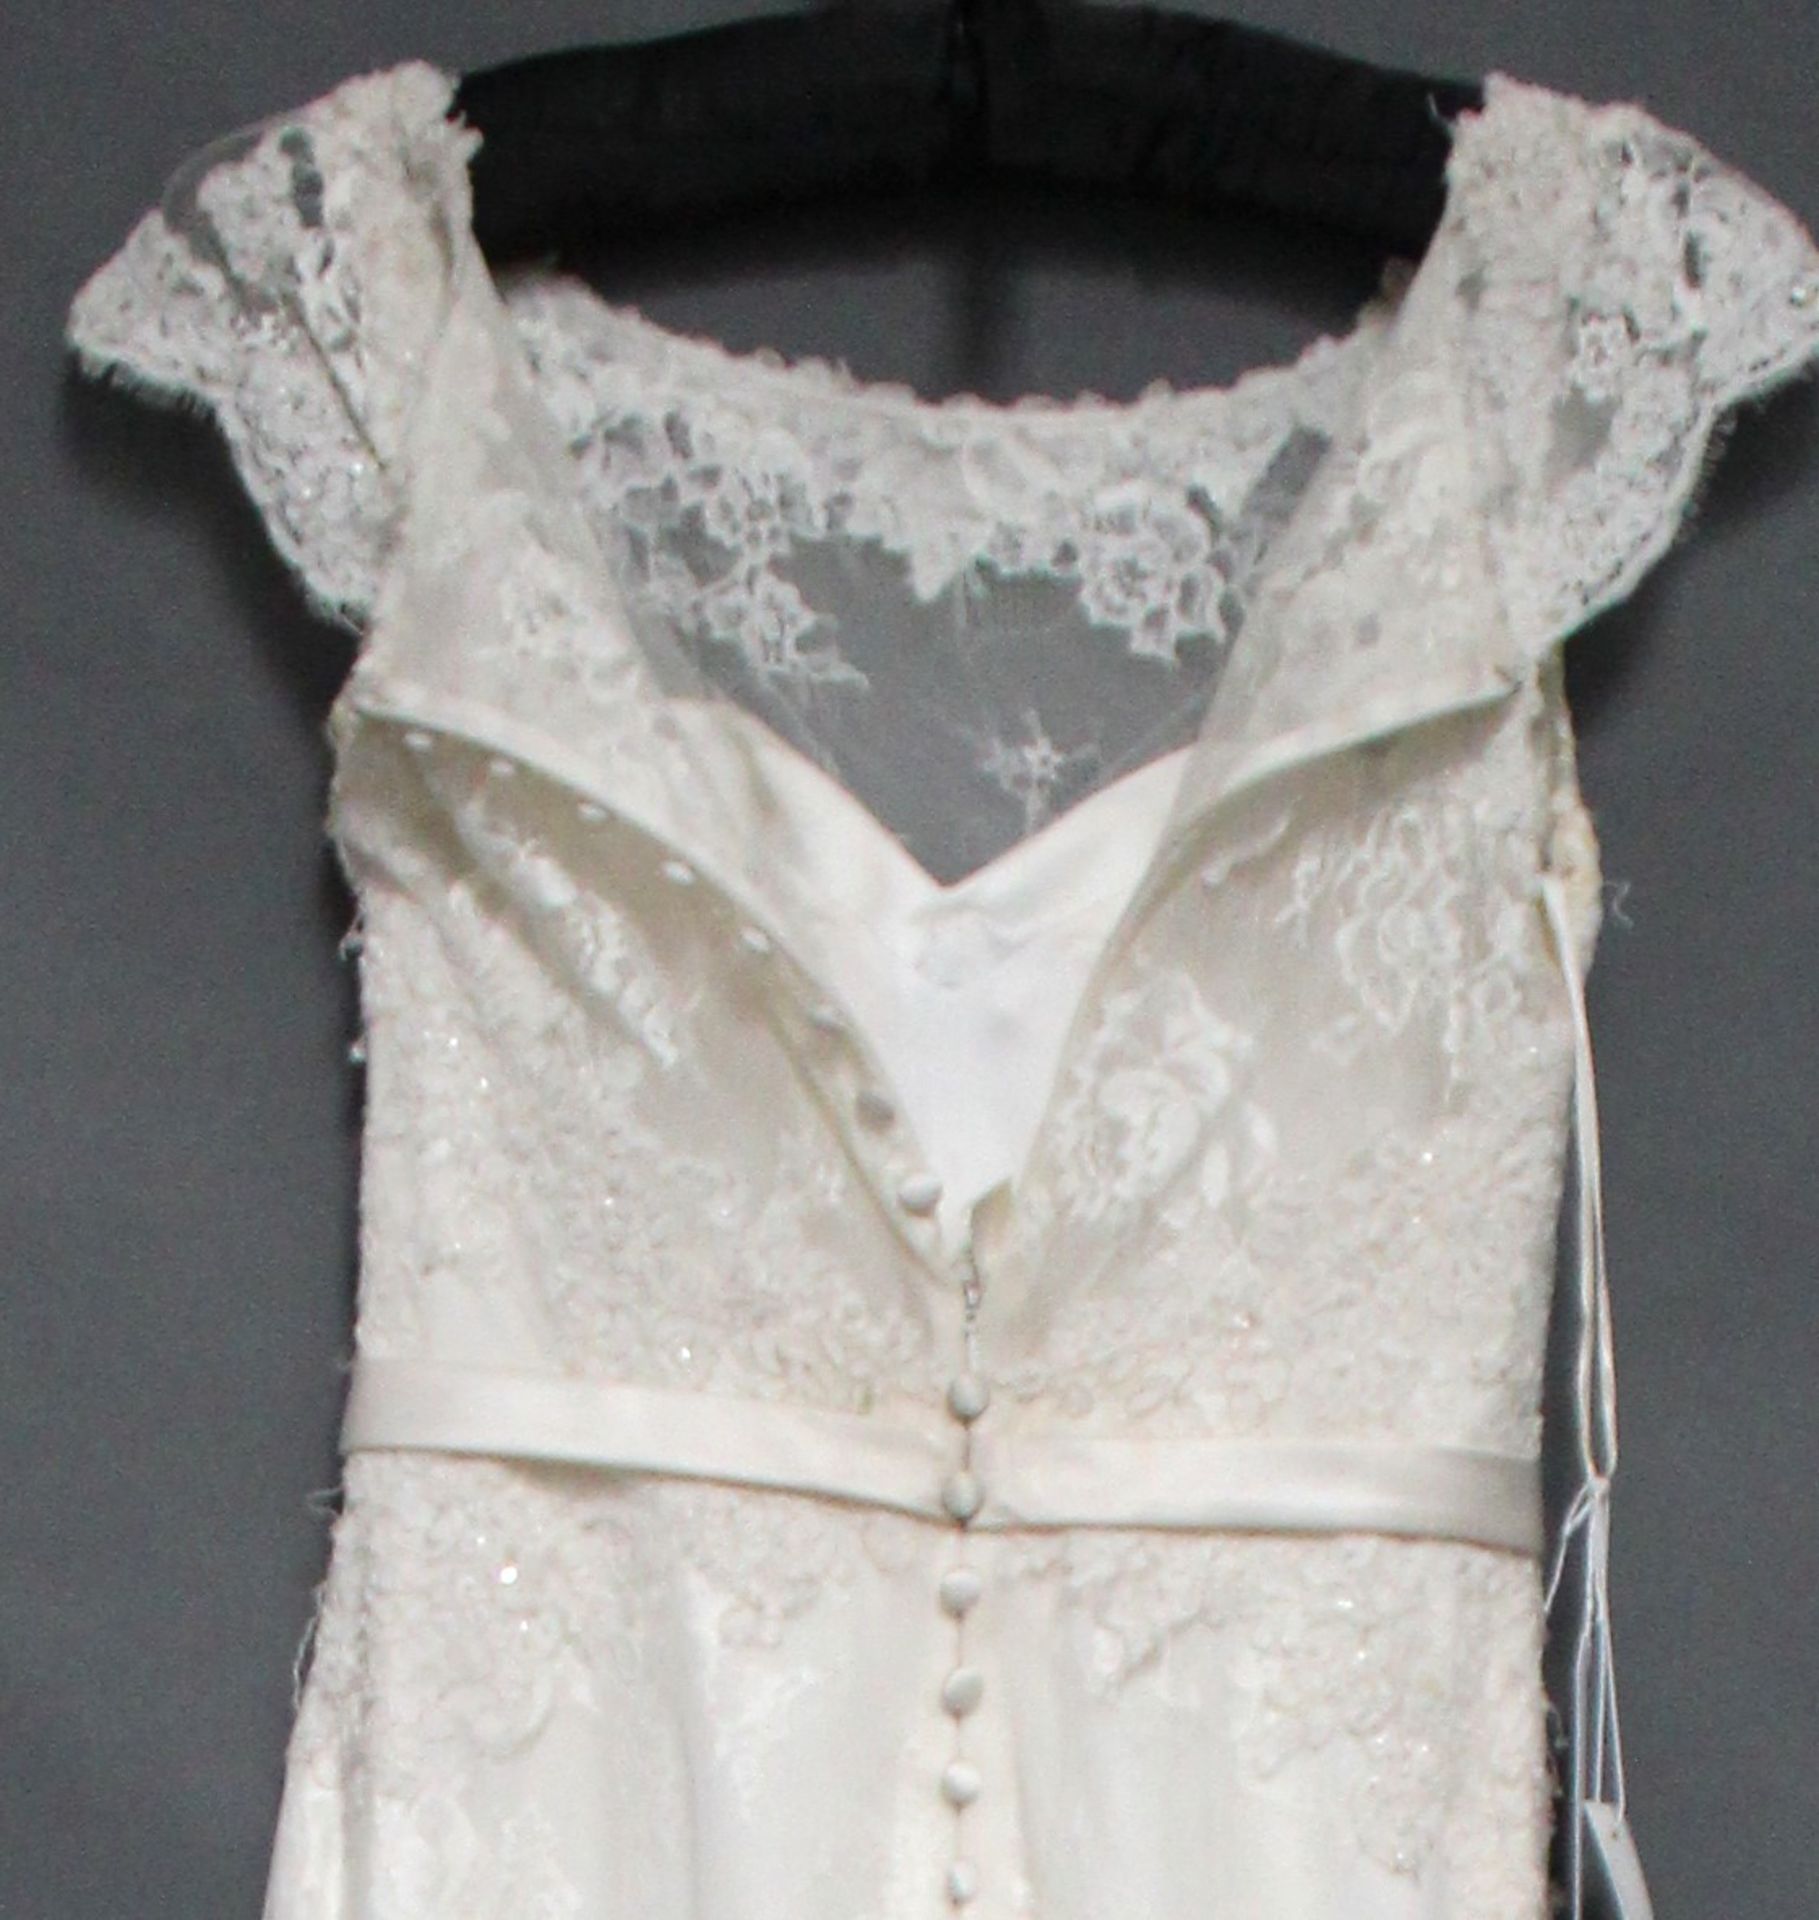 1 x LUSAN MANDONGUS/ ANNASUL Y Lace Overlay Full Skirt Designer Wedding Dress RRP £1,500 UK14 - Image 4 of 7